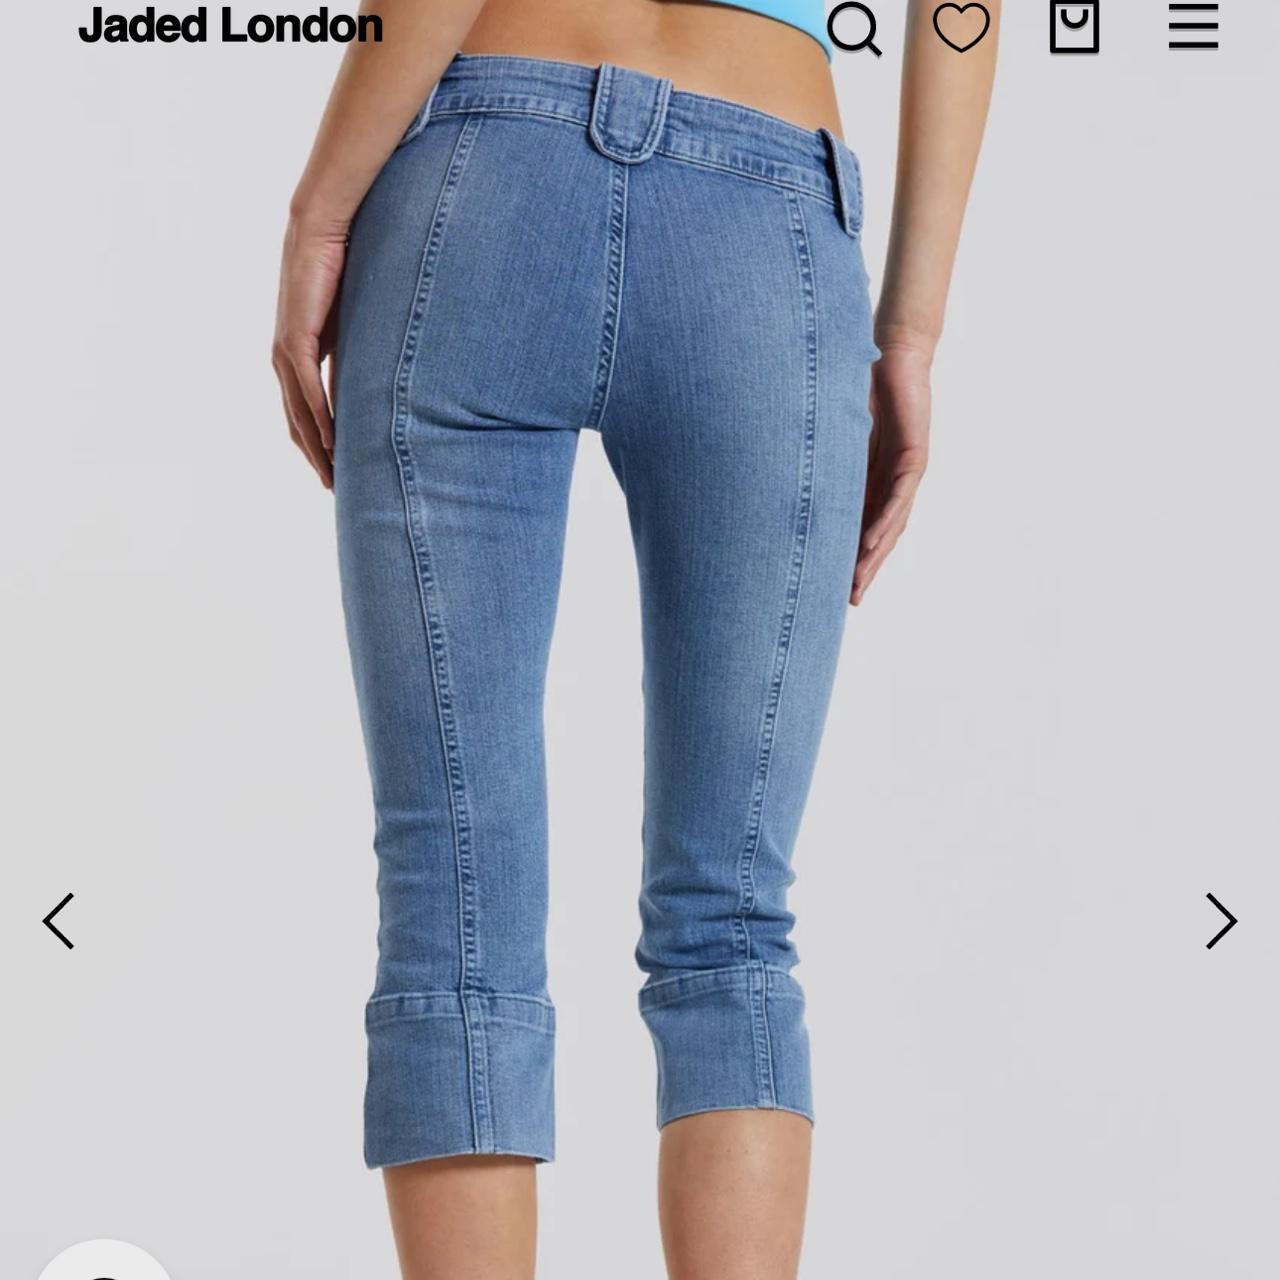 Jaded London 00’s capris!! Cut Me Off Jeans NWT, So